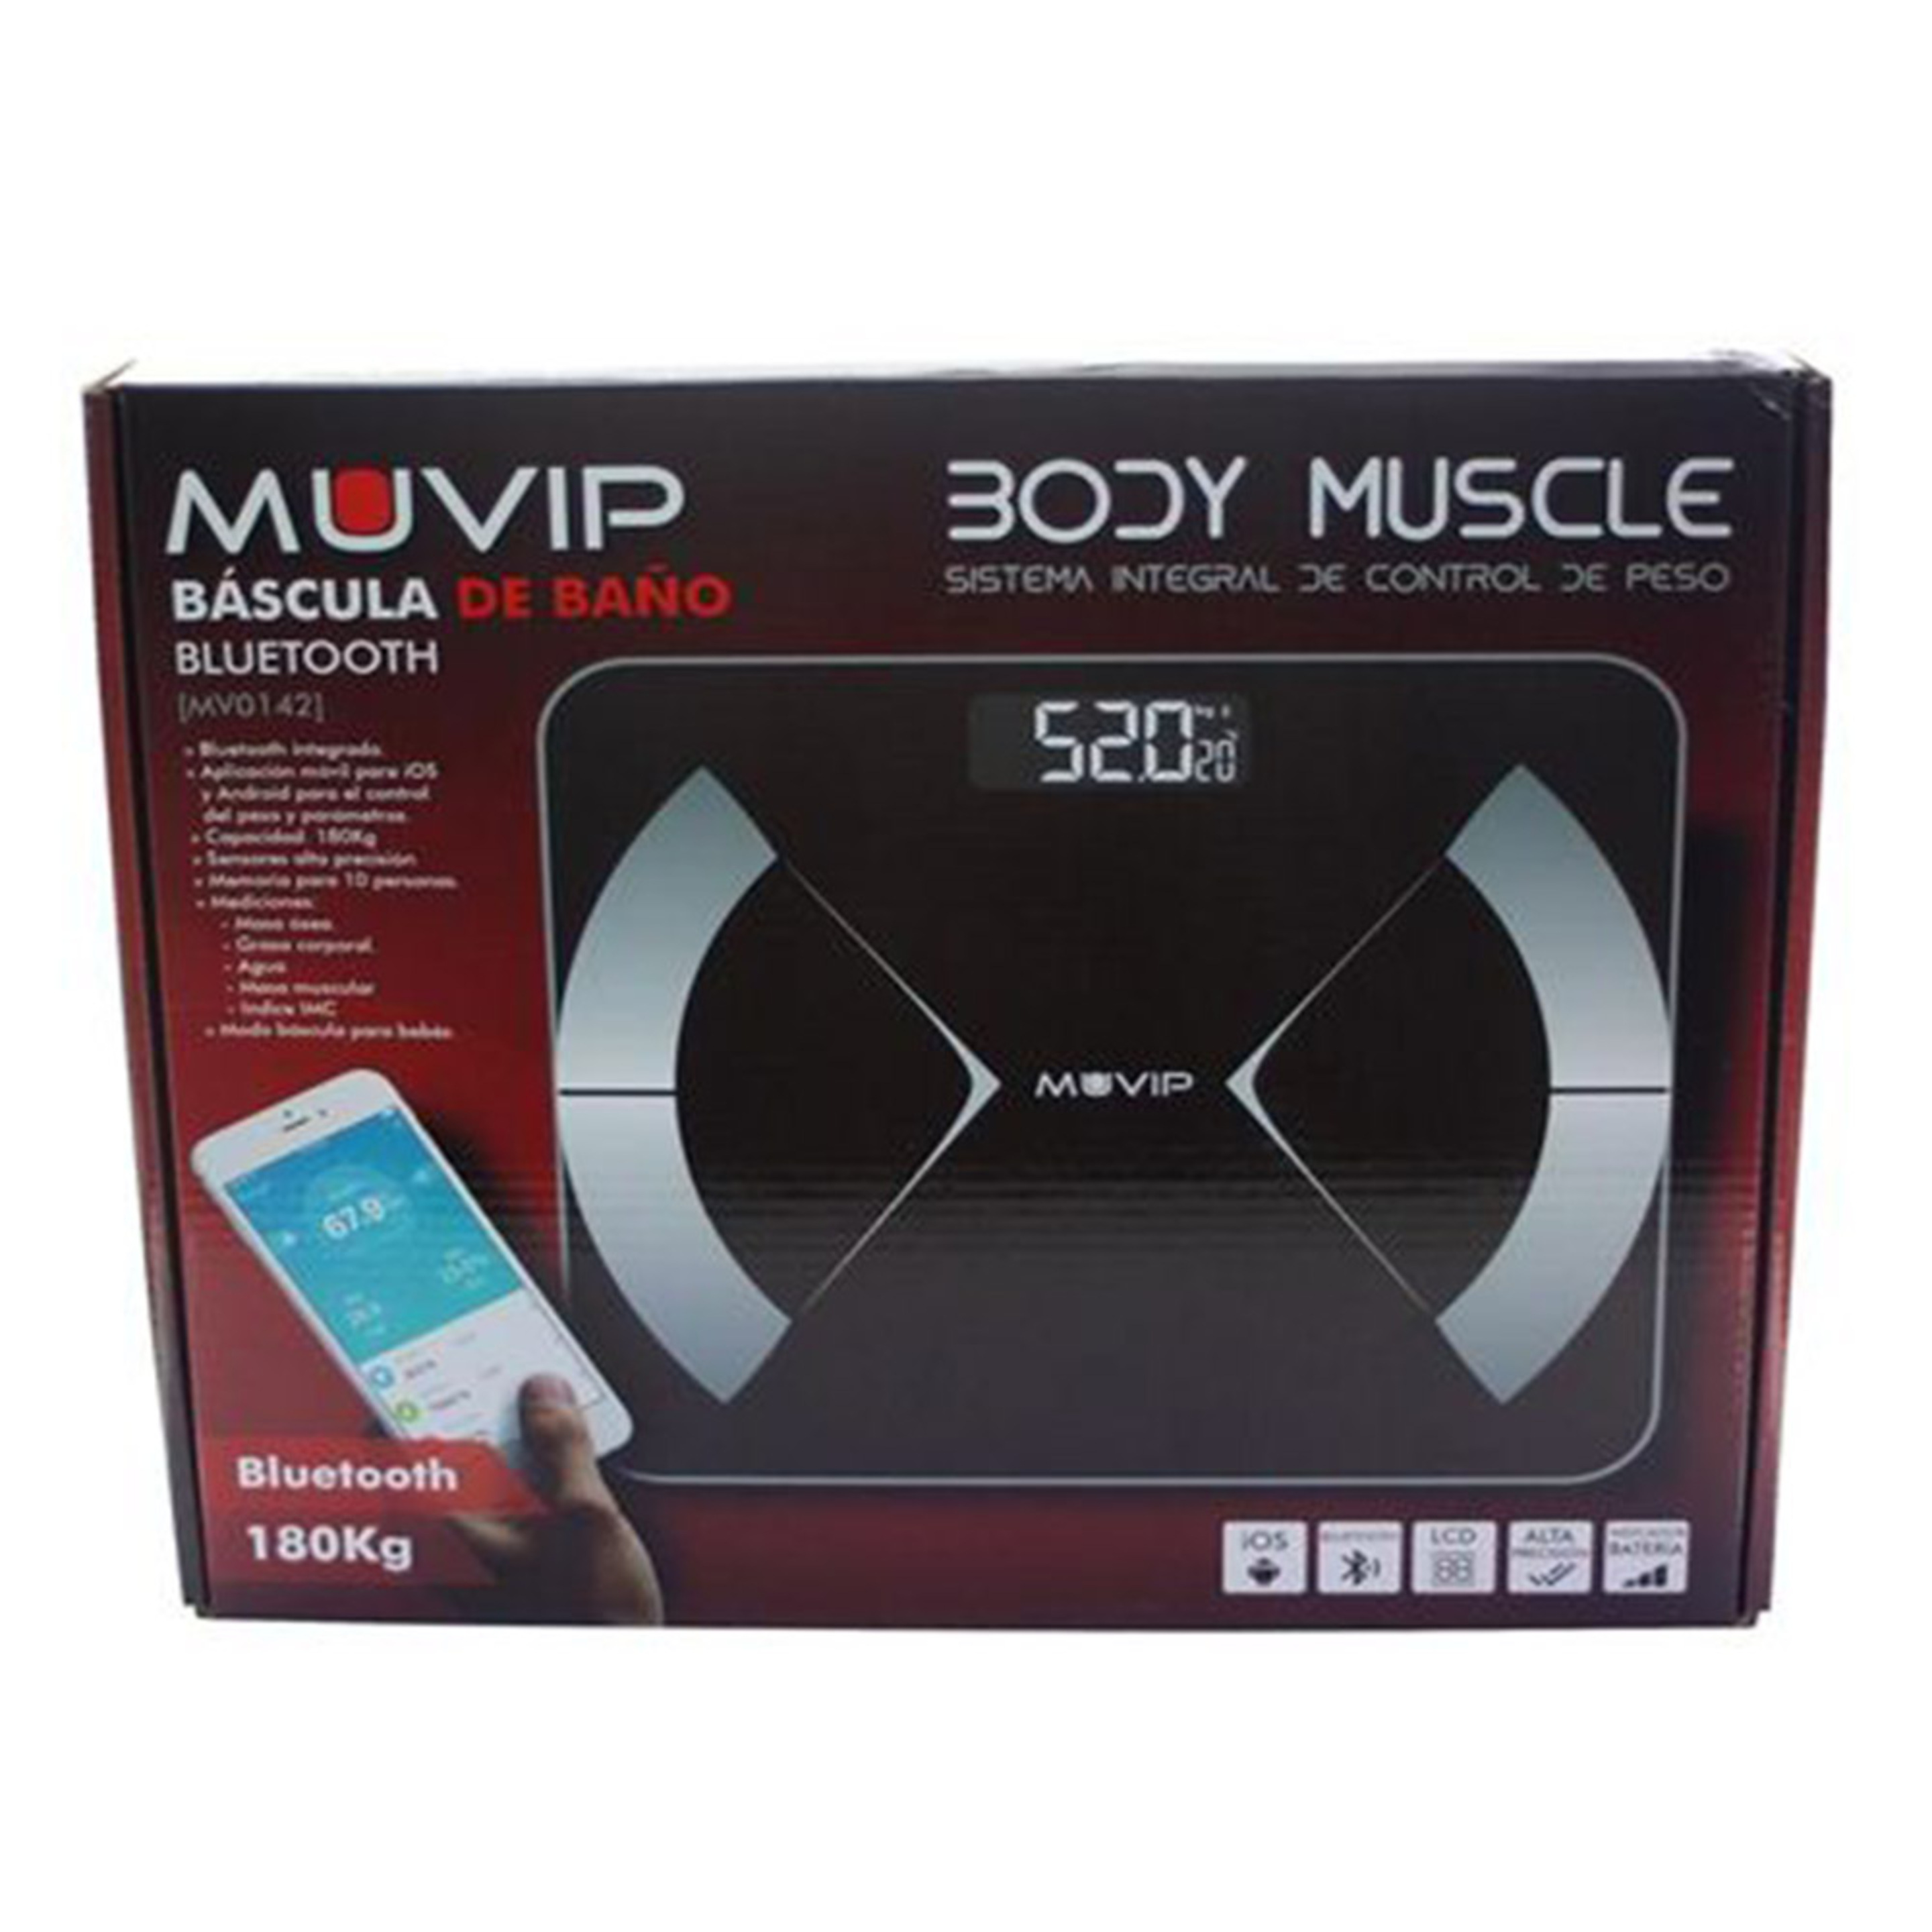 Báscula Digital Body Muscle Bluetooth Muvip